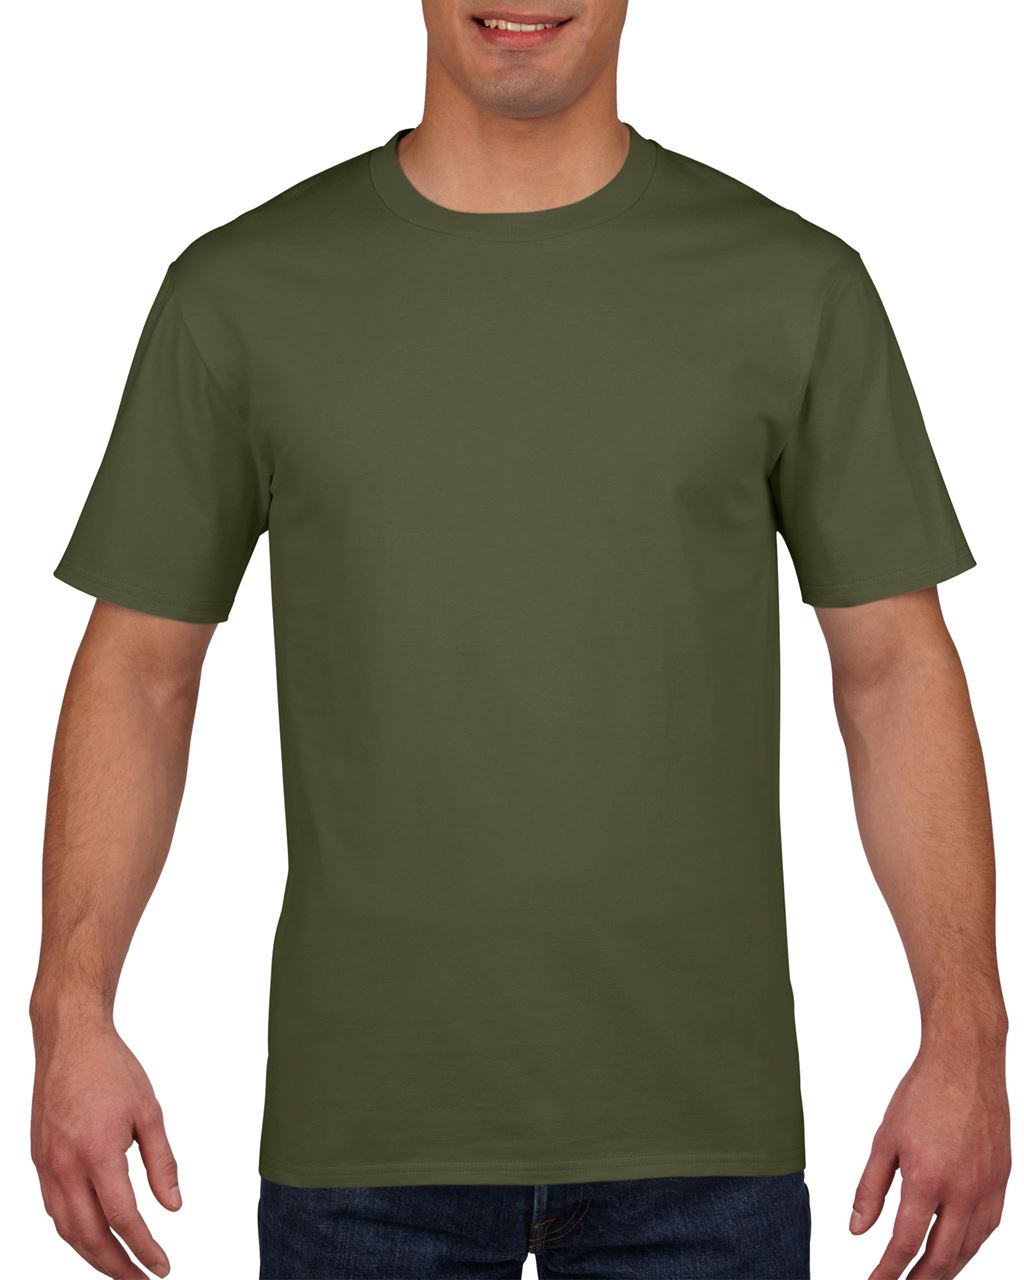 Military green Tricou barbatesc Gildan Premium Cotton bumbac 185 g/mp